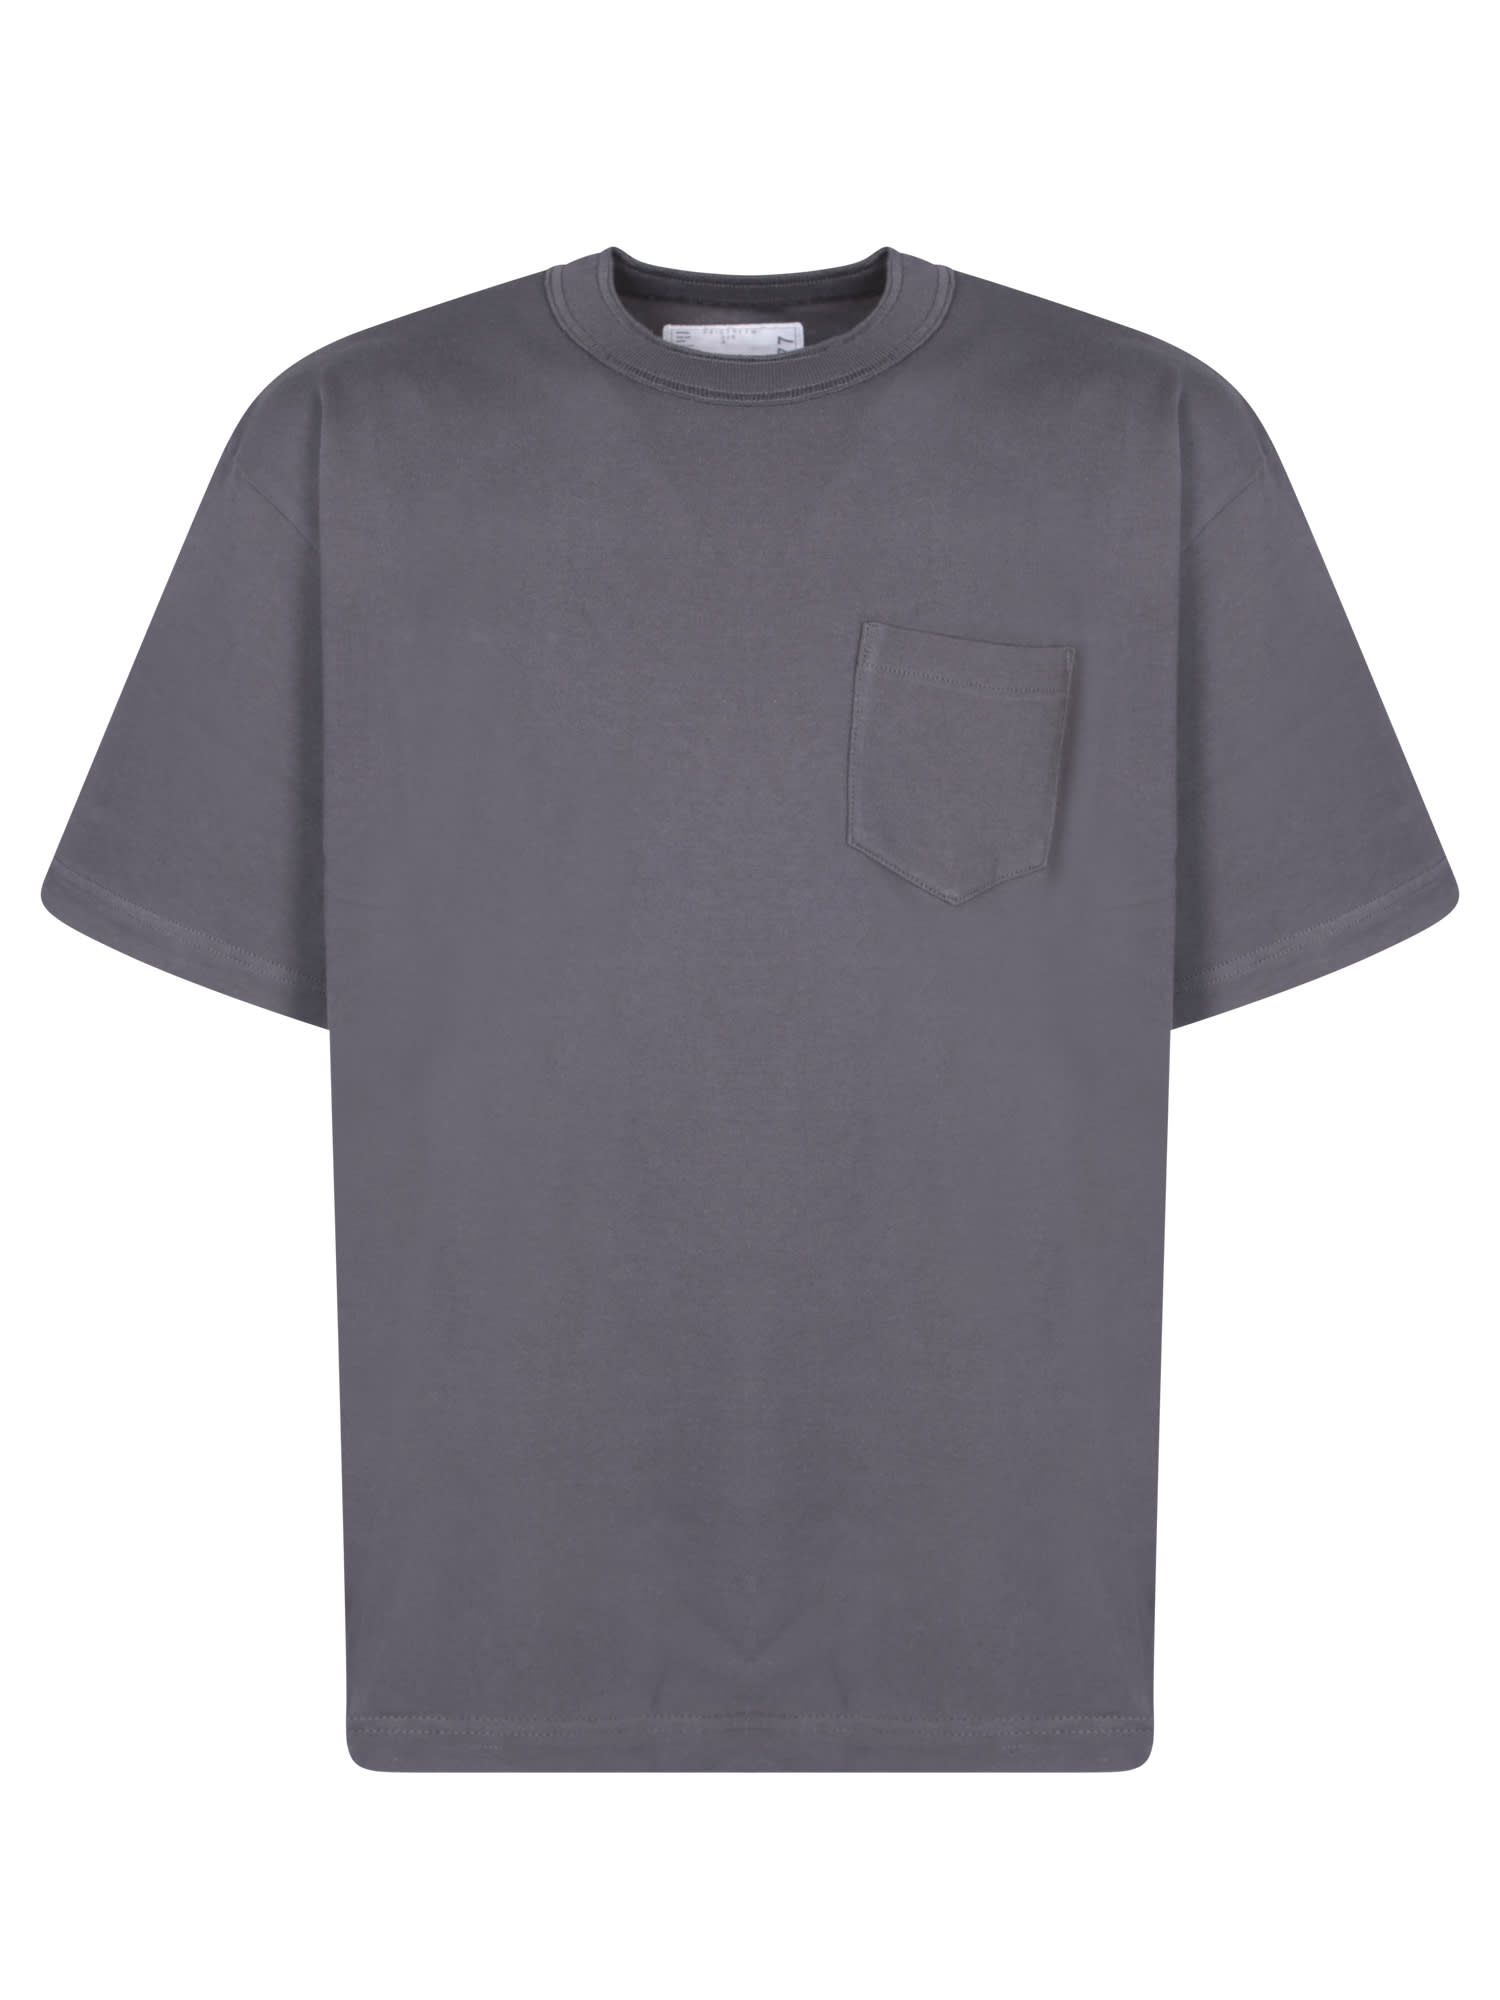 Grey Cotton T-shirt